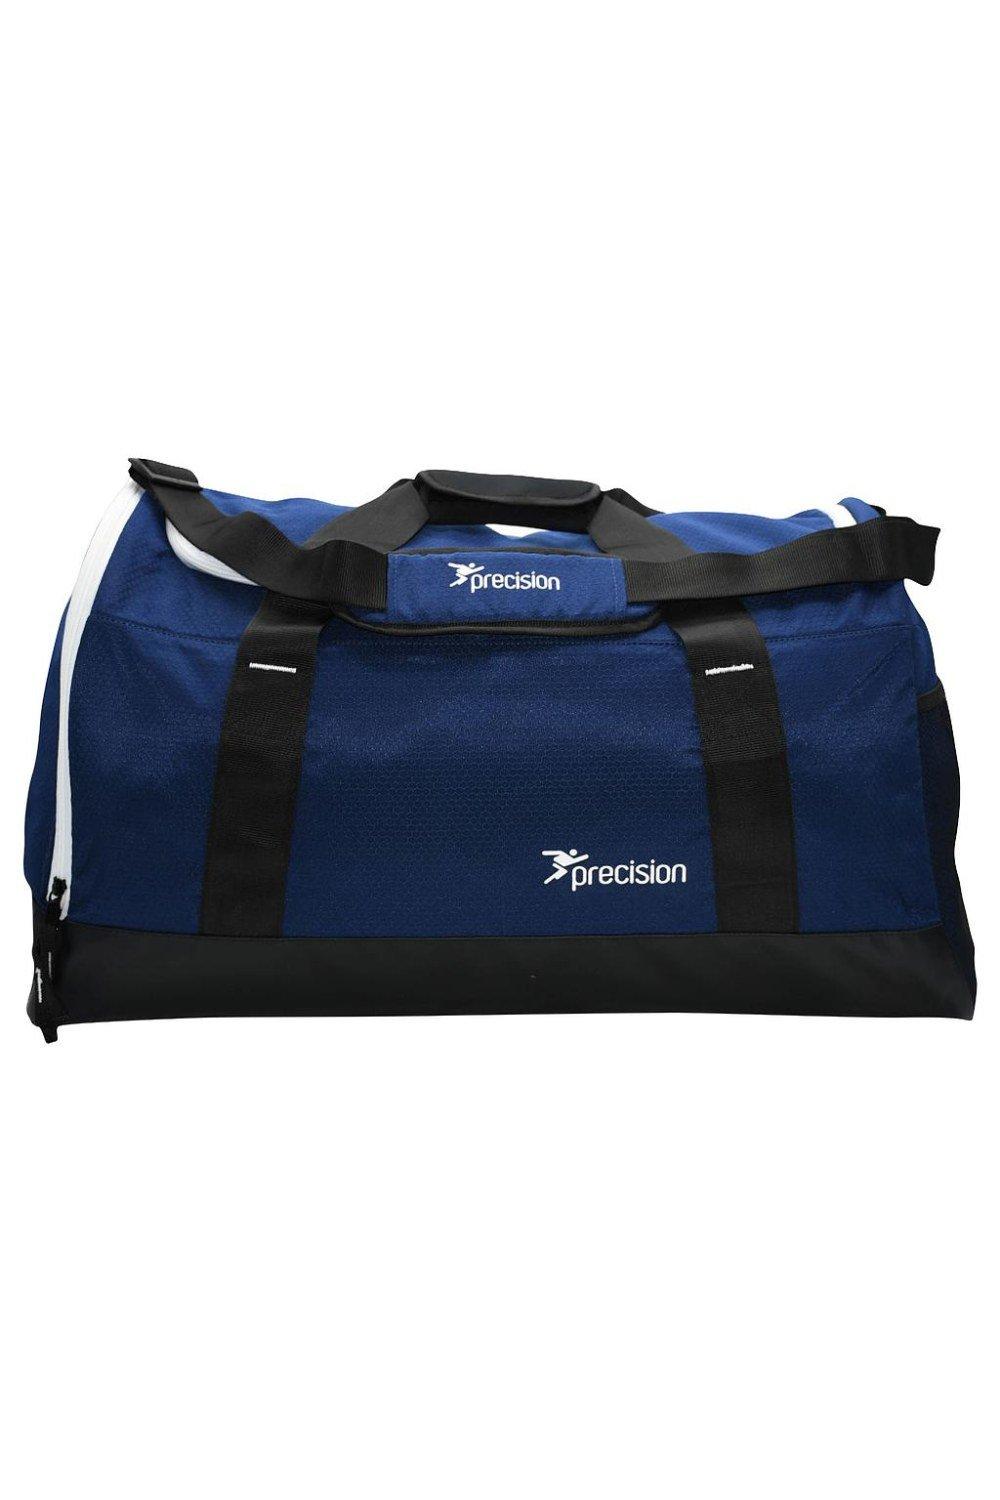 Дорожная сумка Pro Hx Team Precision, темно-синий цена и фото